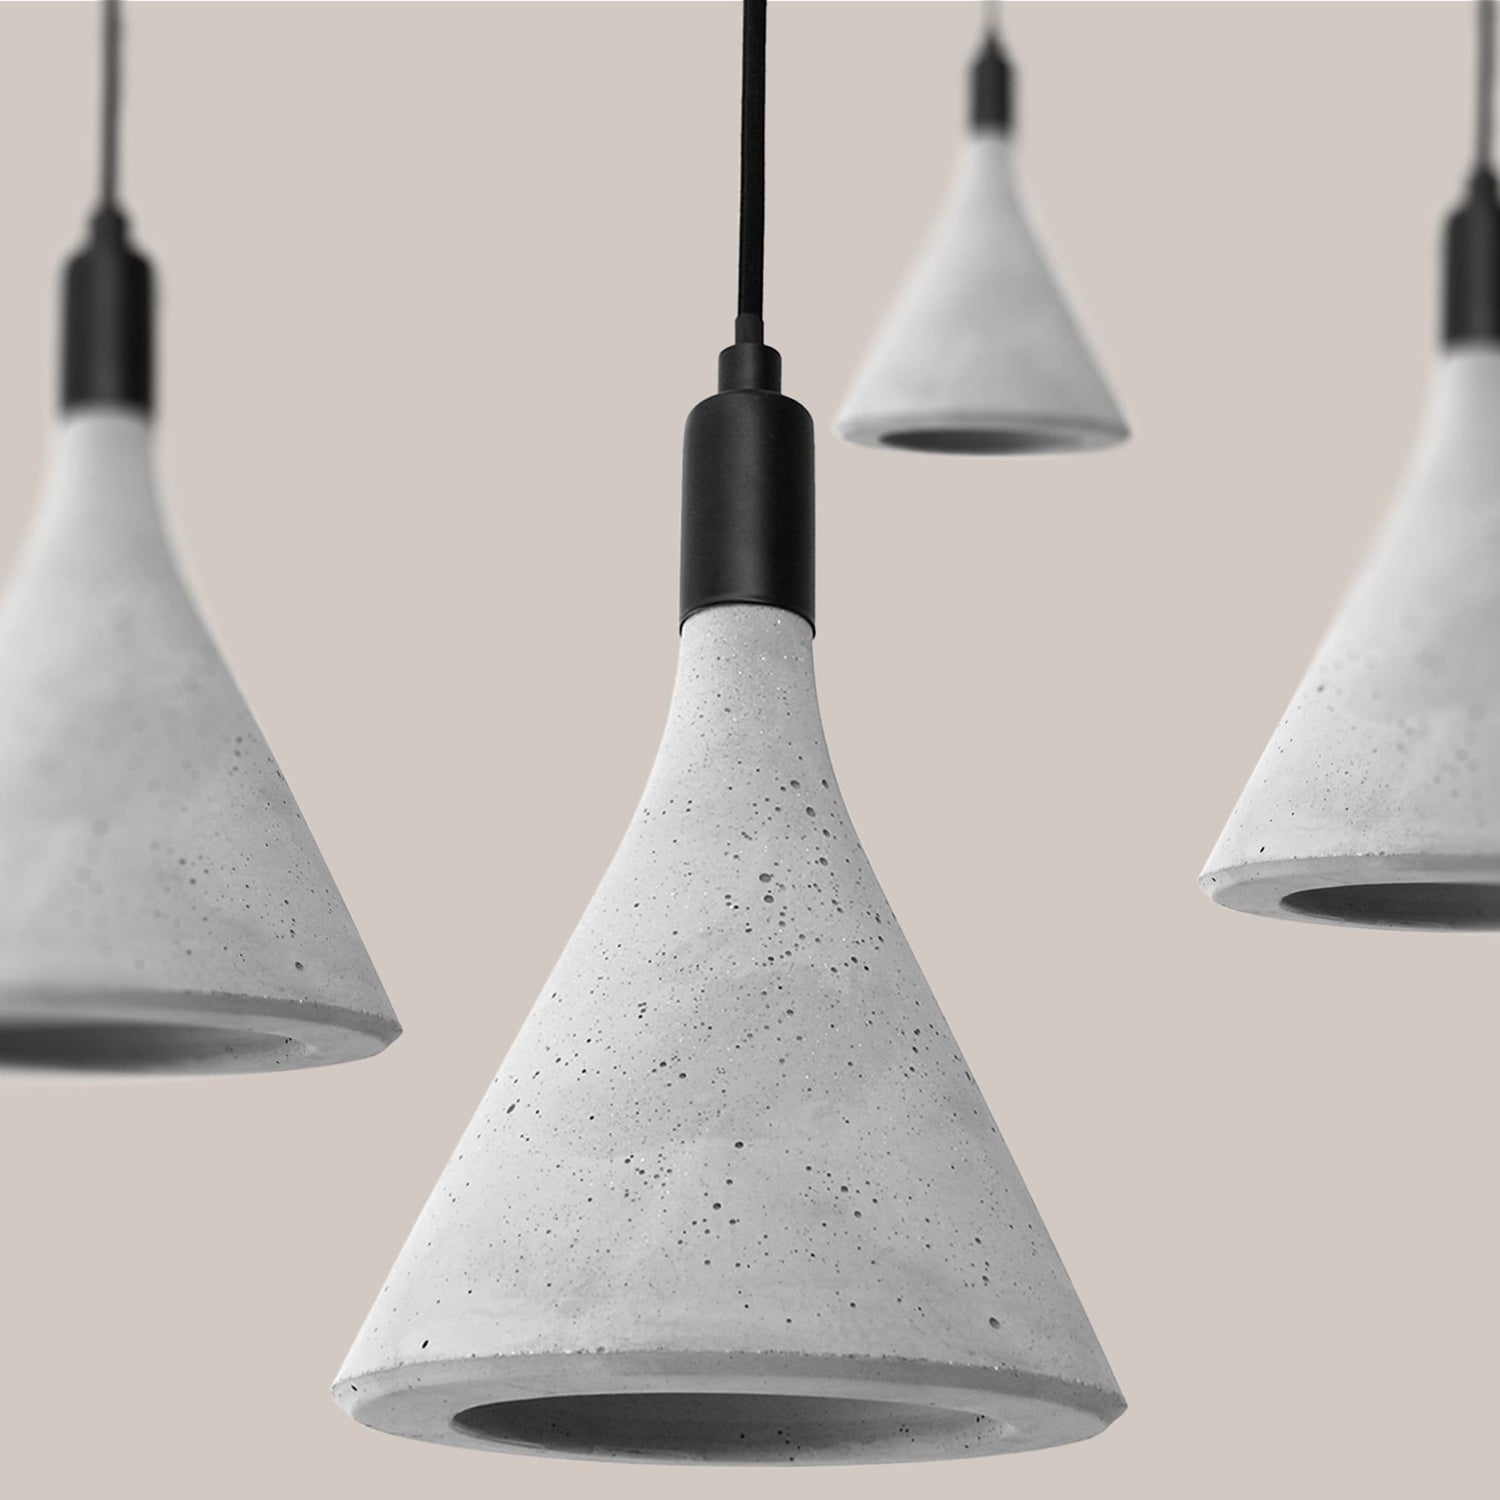 Concrete Cone Pendant Lighting, Kitchen Island Ceiling Cement Lamp, Living Room Industrial Lighting, Minimalist Light MODEL : CONE